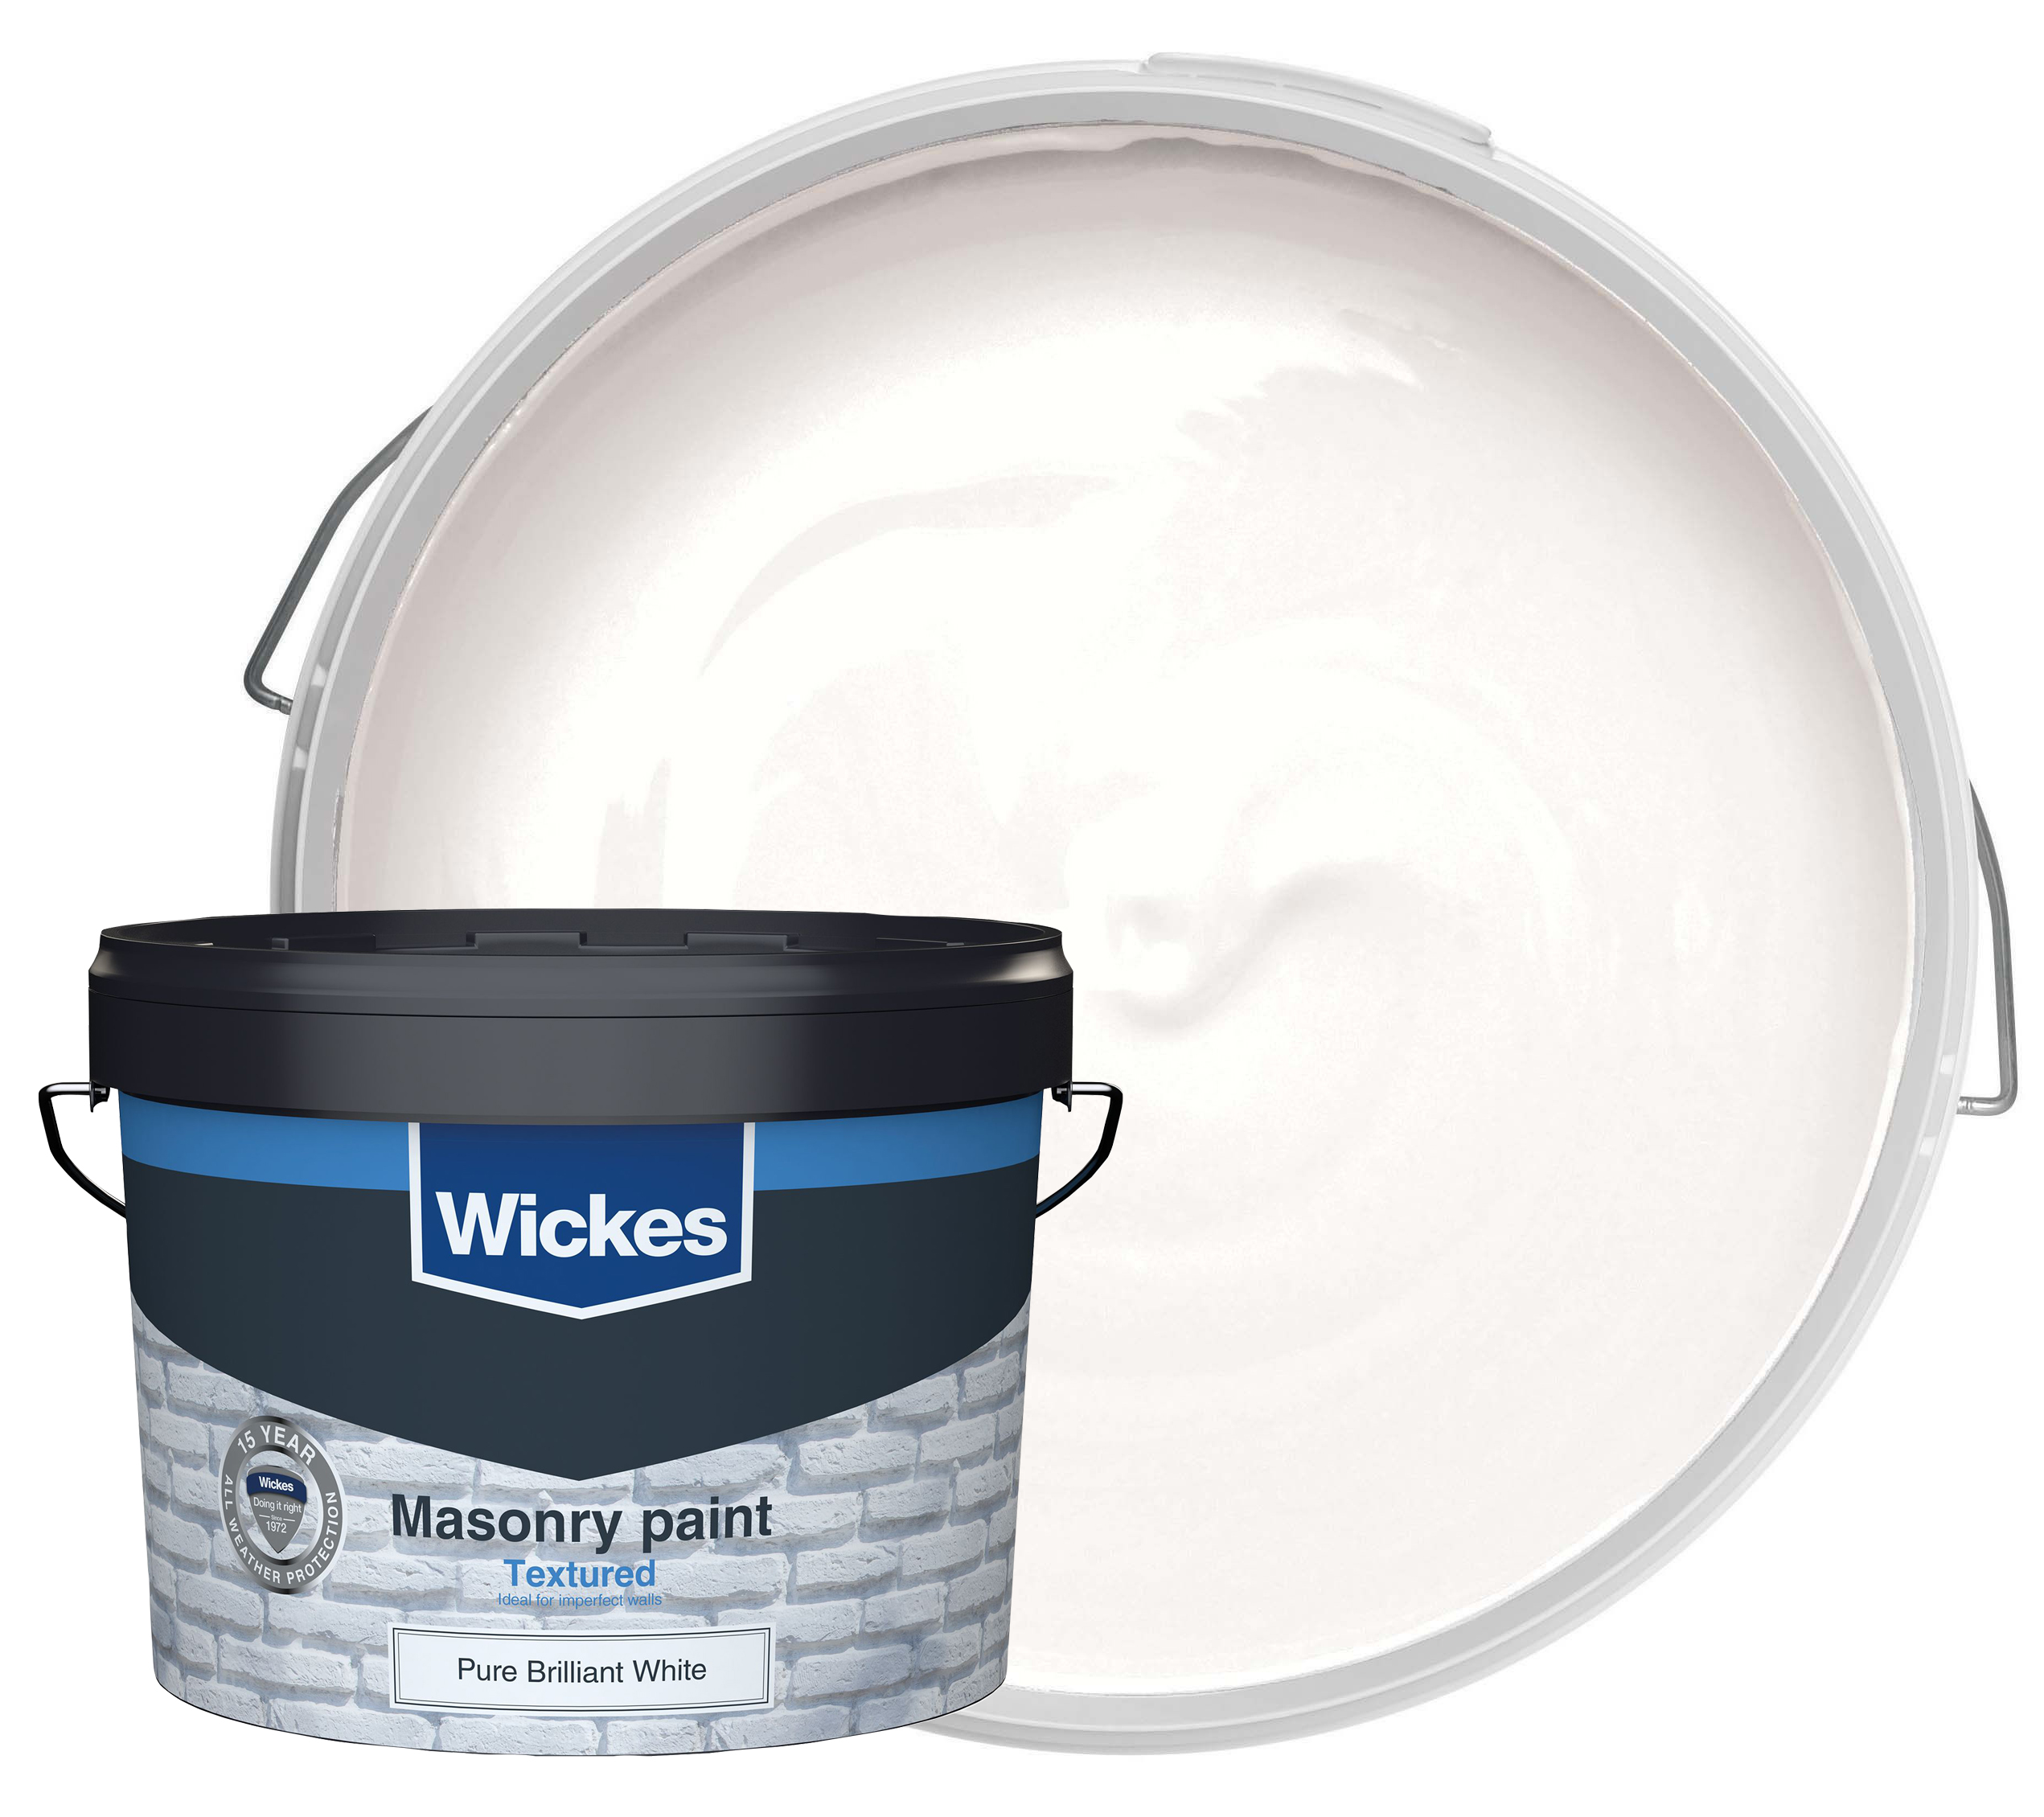 Wickes Textured Masonry Paint - Pure Brilliant White - 10L